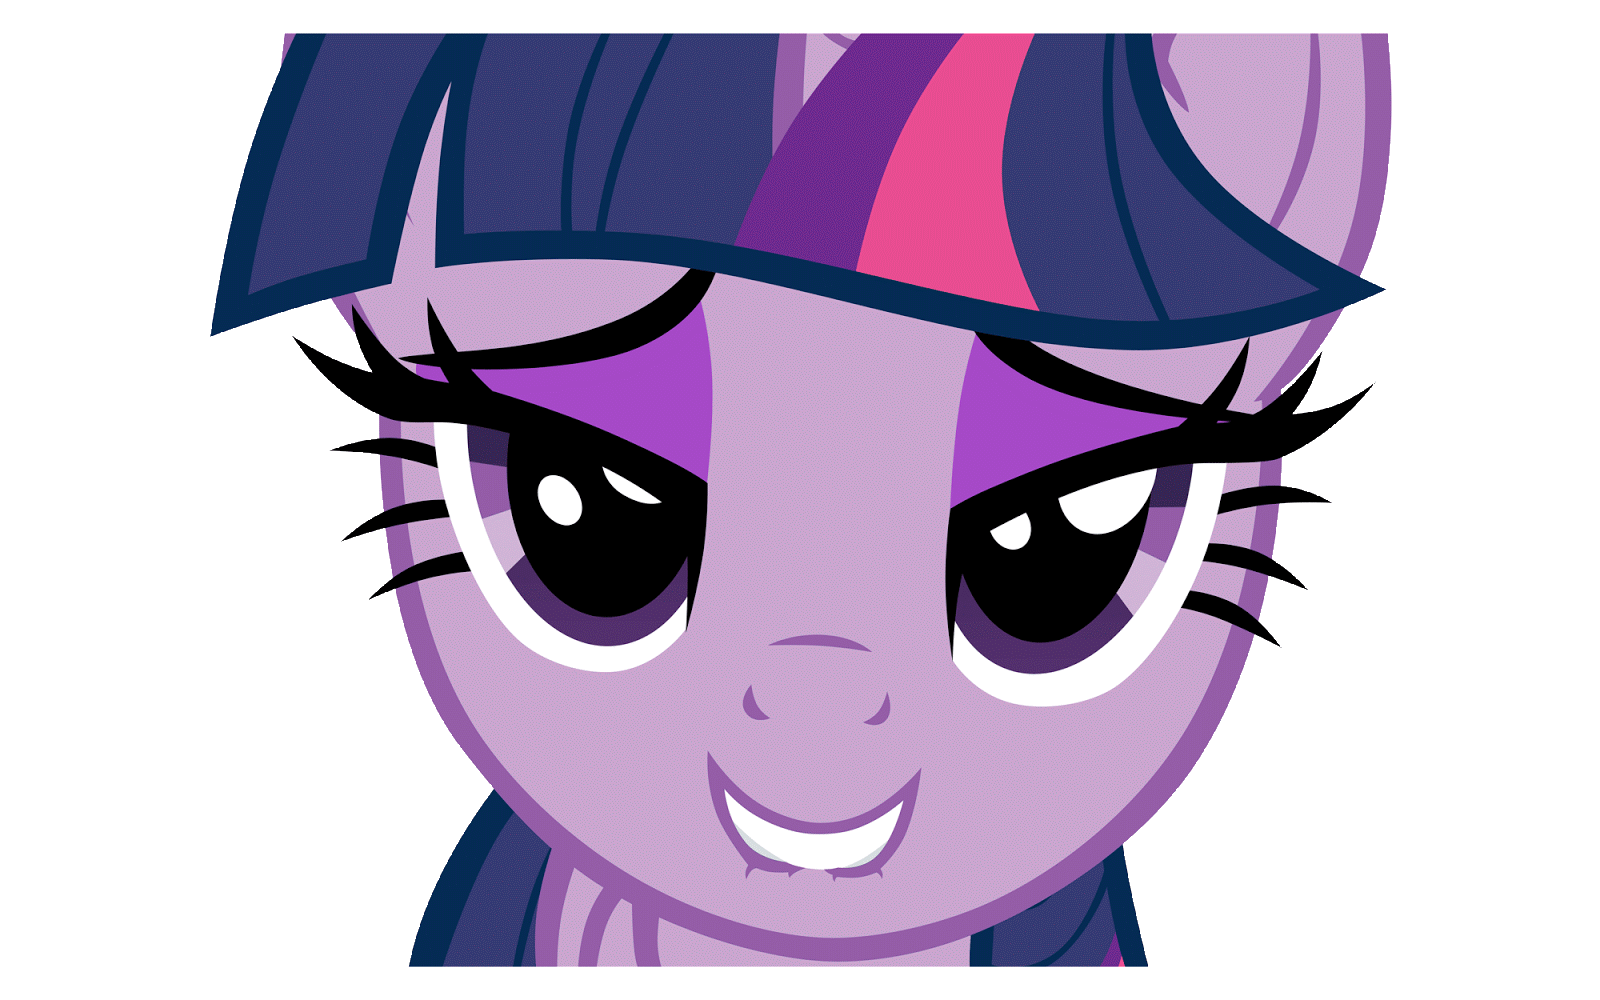 35 Top Animasi Bergerak Twilight Sparkle Di Kartun My Little Pony